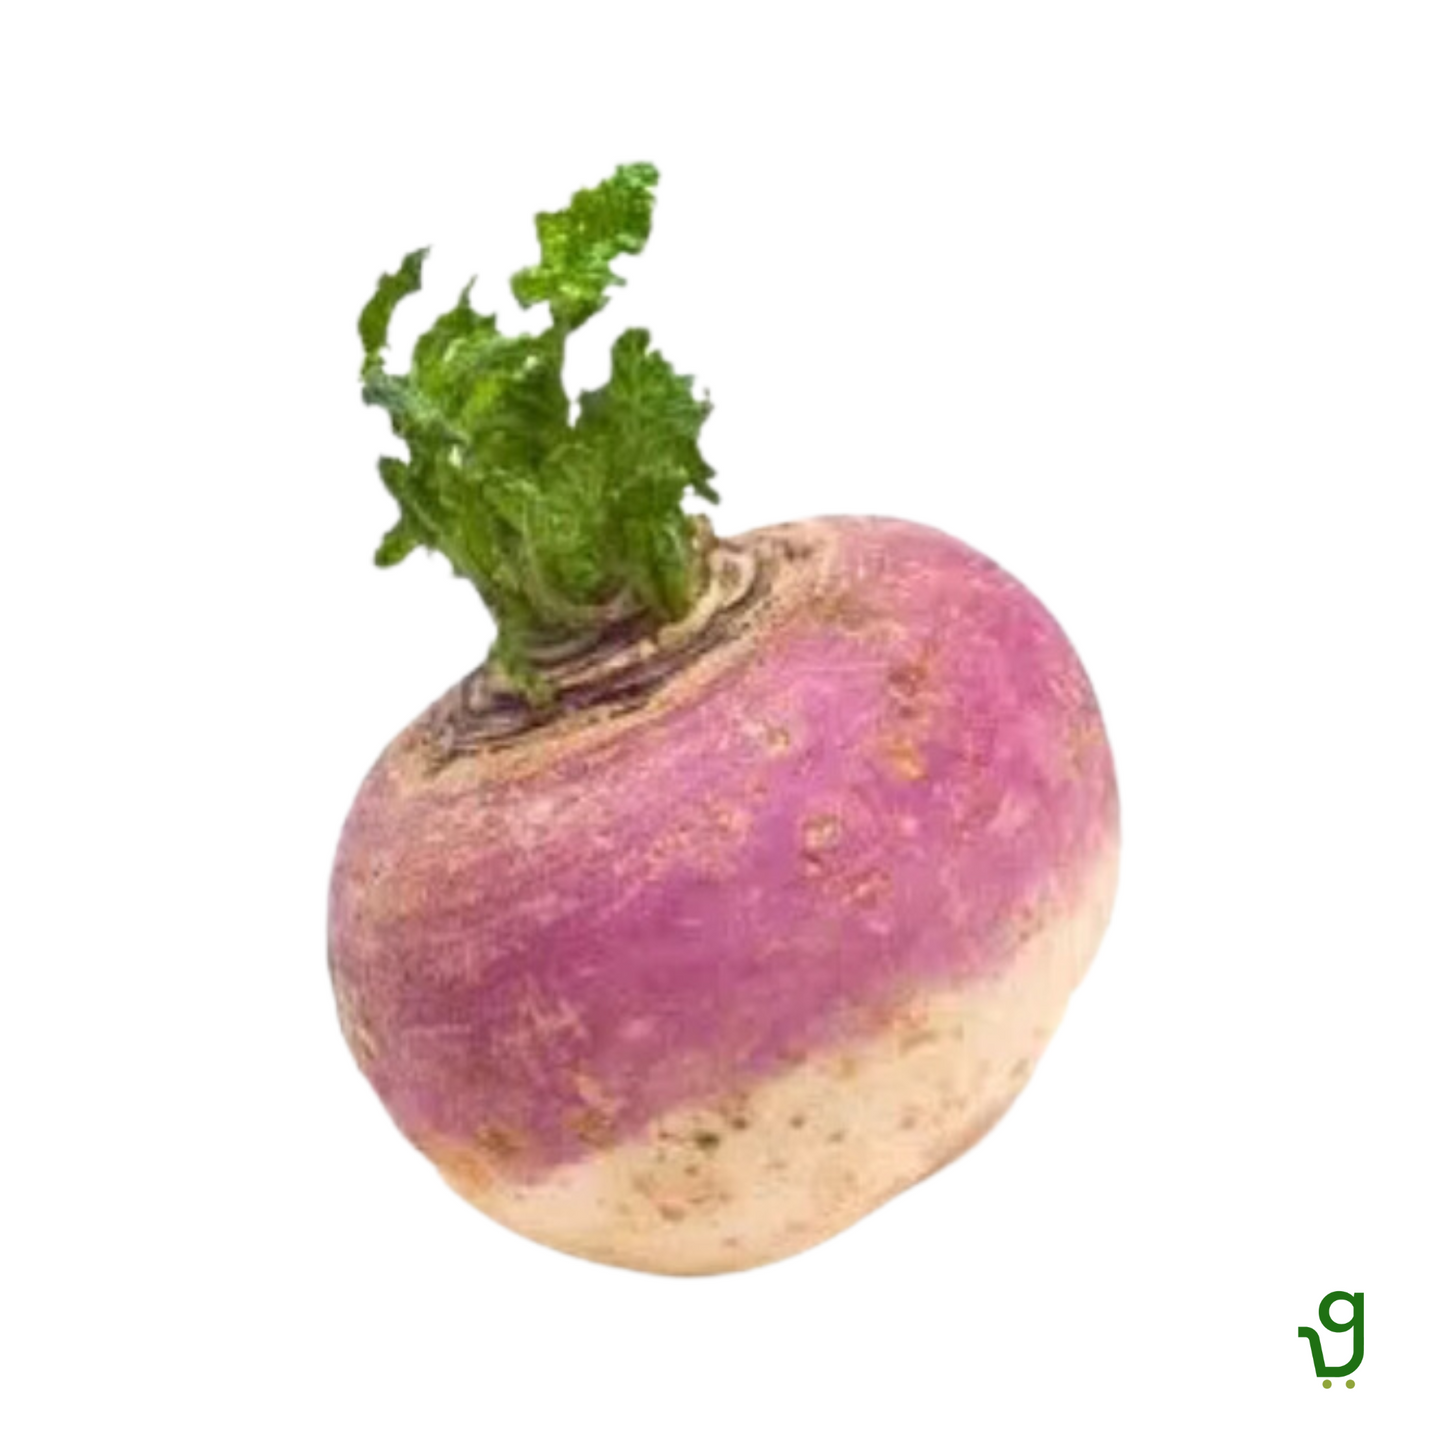 Turnip (1 Kg)